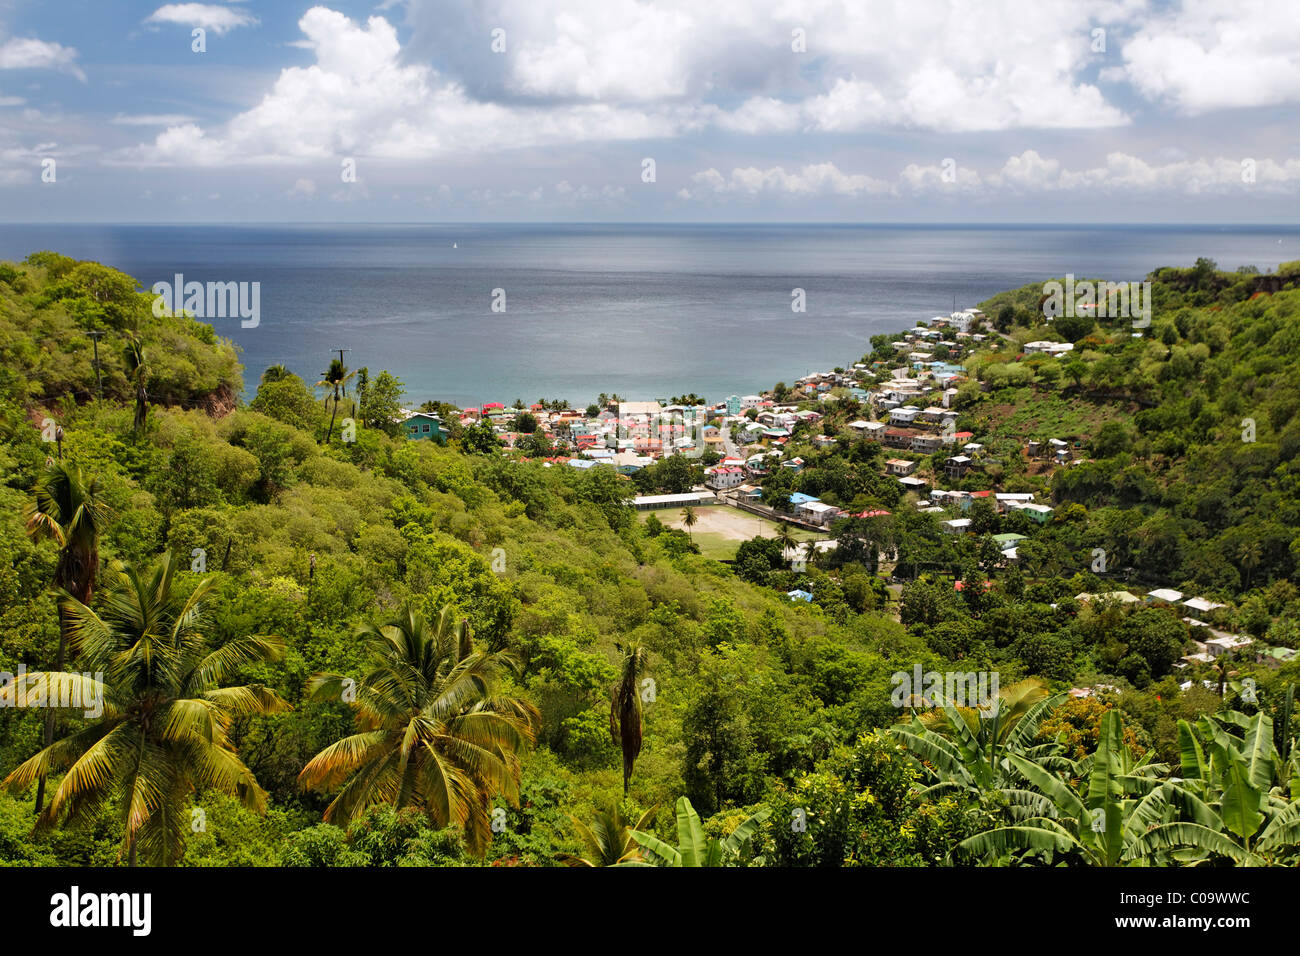 Verde isola tropicale paesaggistico, baia, l'oceano, città, Canarie, Saint Lucia, LCA, isole Windward, Piccole Antille, dei Caraibi Foto Stock